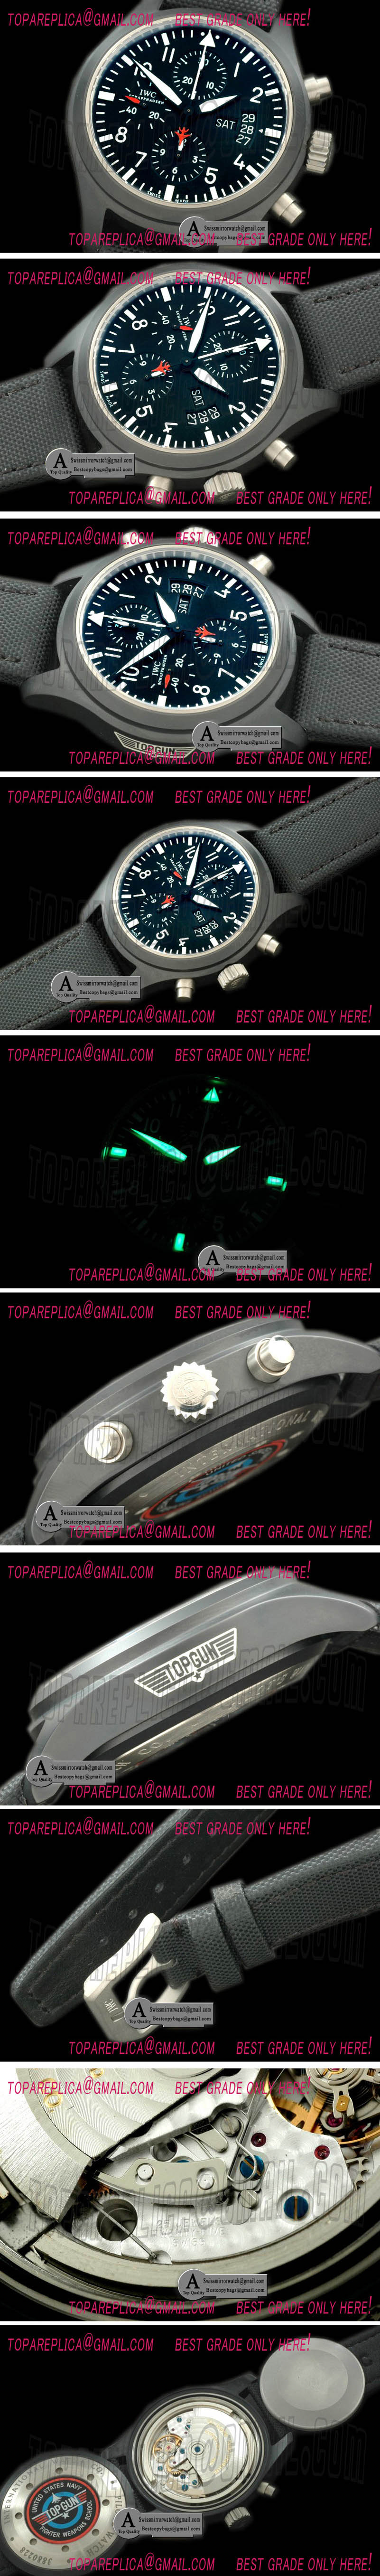 IWC IW378901 3789 Top Gun Pilot Chrono V1 Ceramic/Nylon/Black Swiss Replica Watches